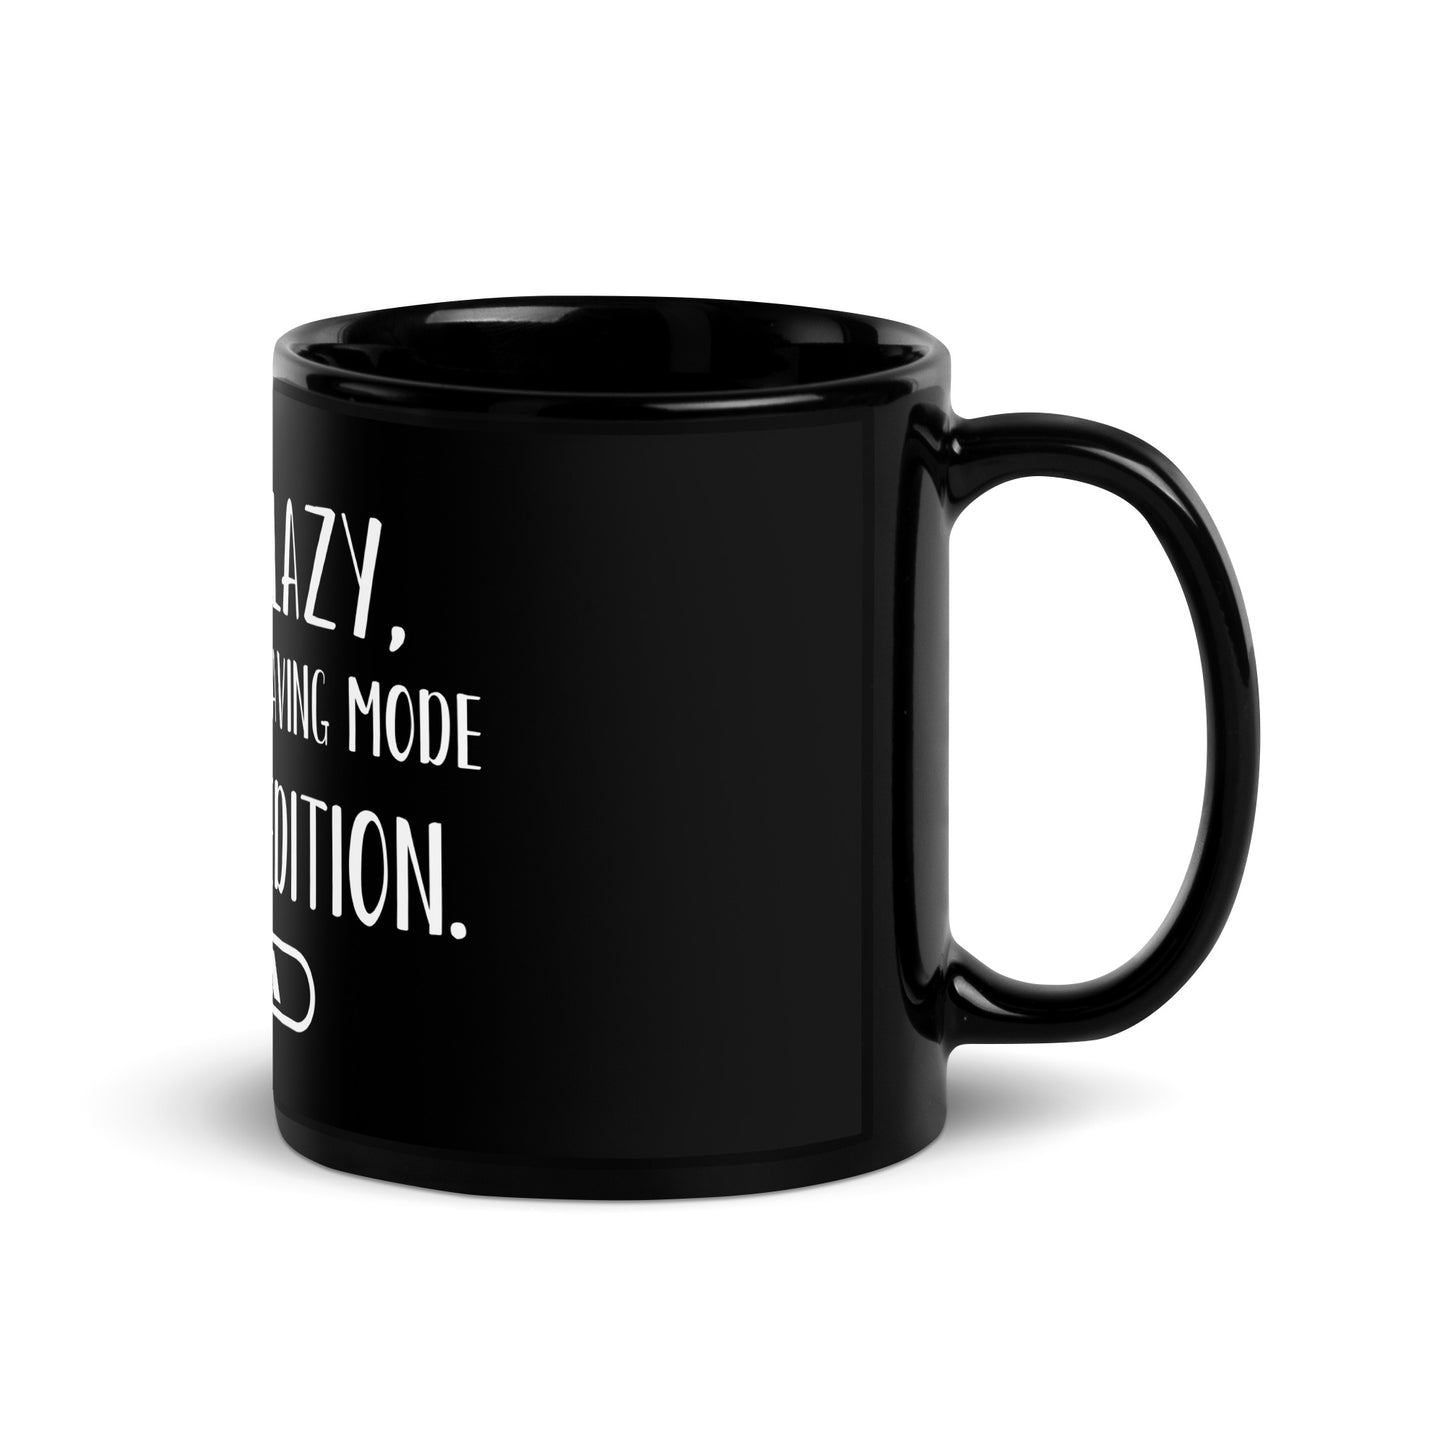 “I’m not lazy, I’m in energy- saving mode - Artist edition.” - Glossy Mug